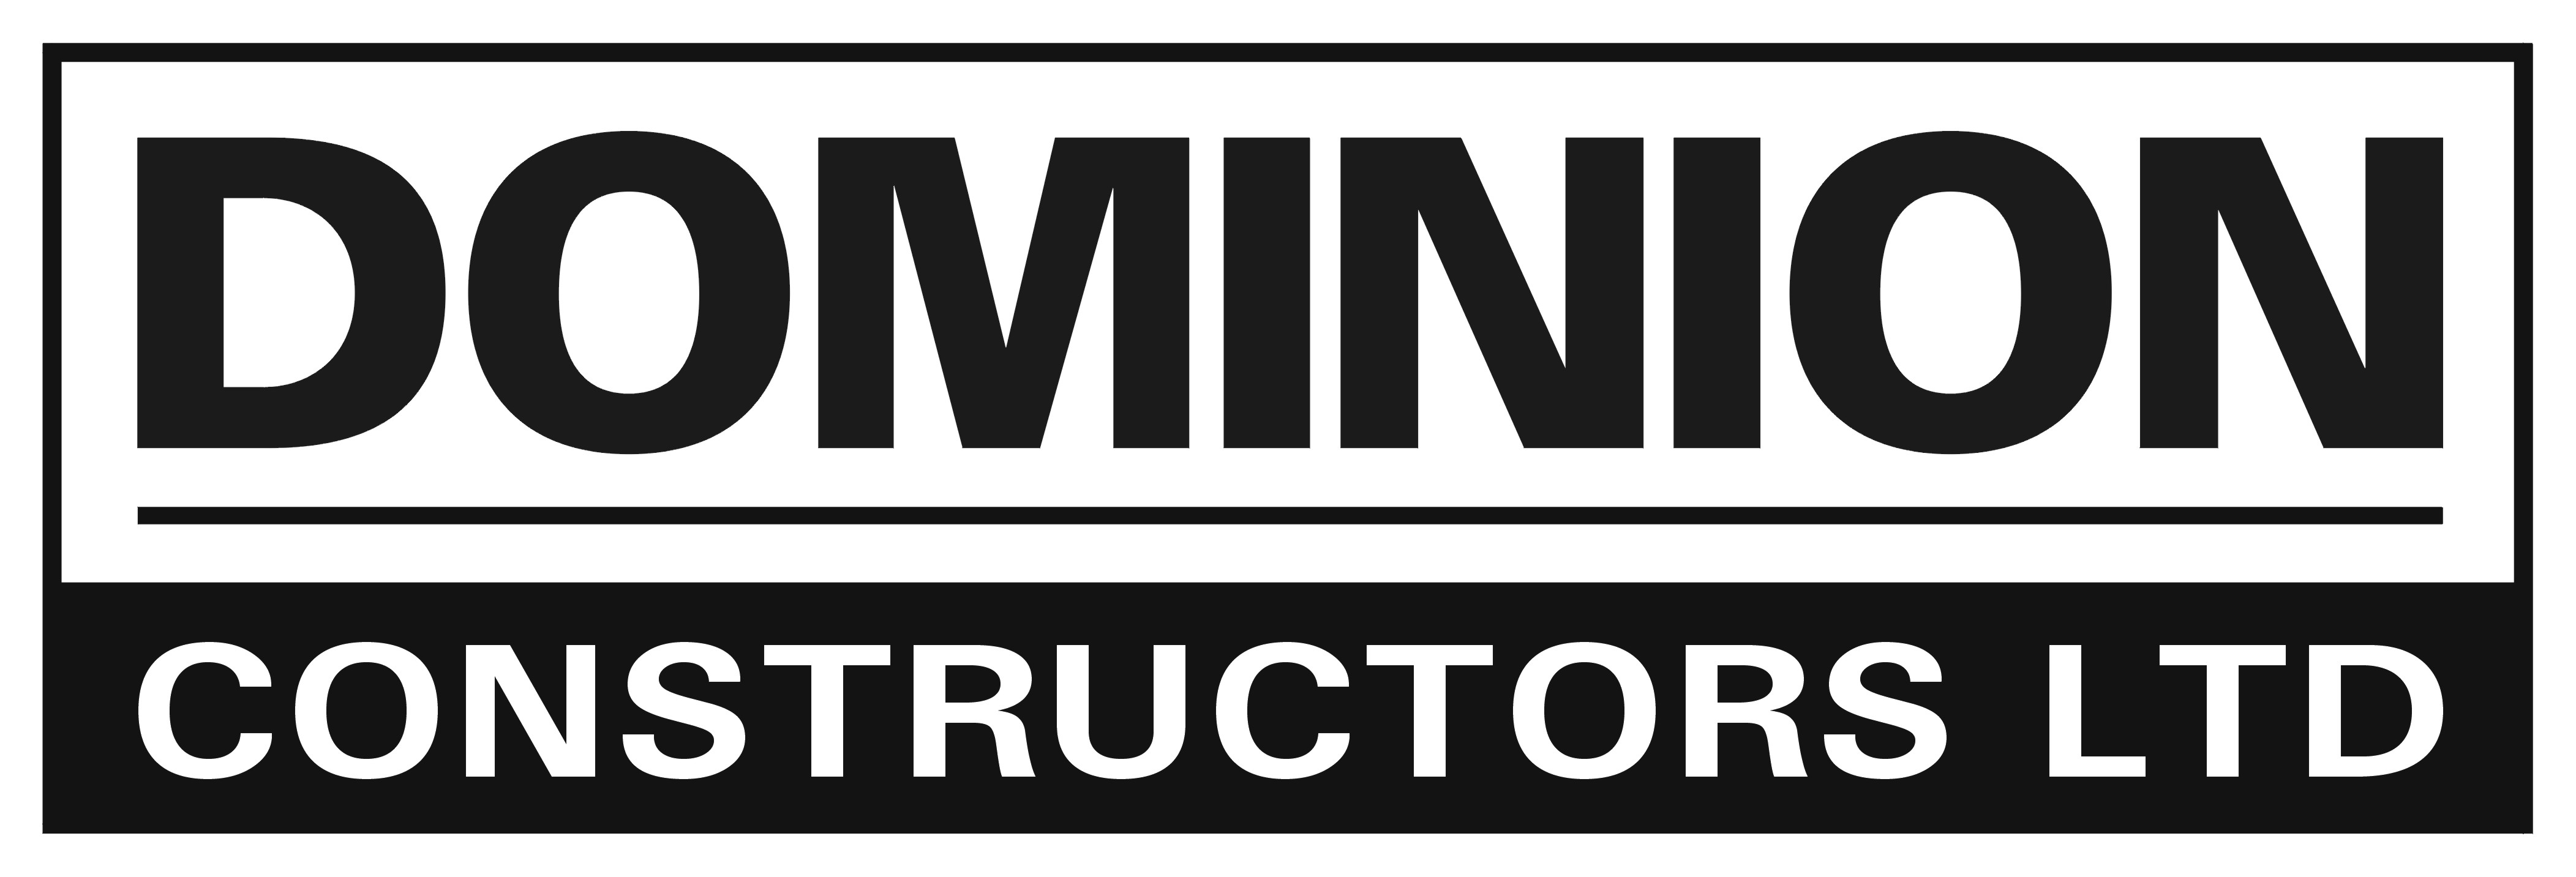 Dominion Construction Logo (600dpi).jpg